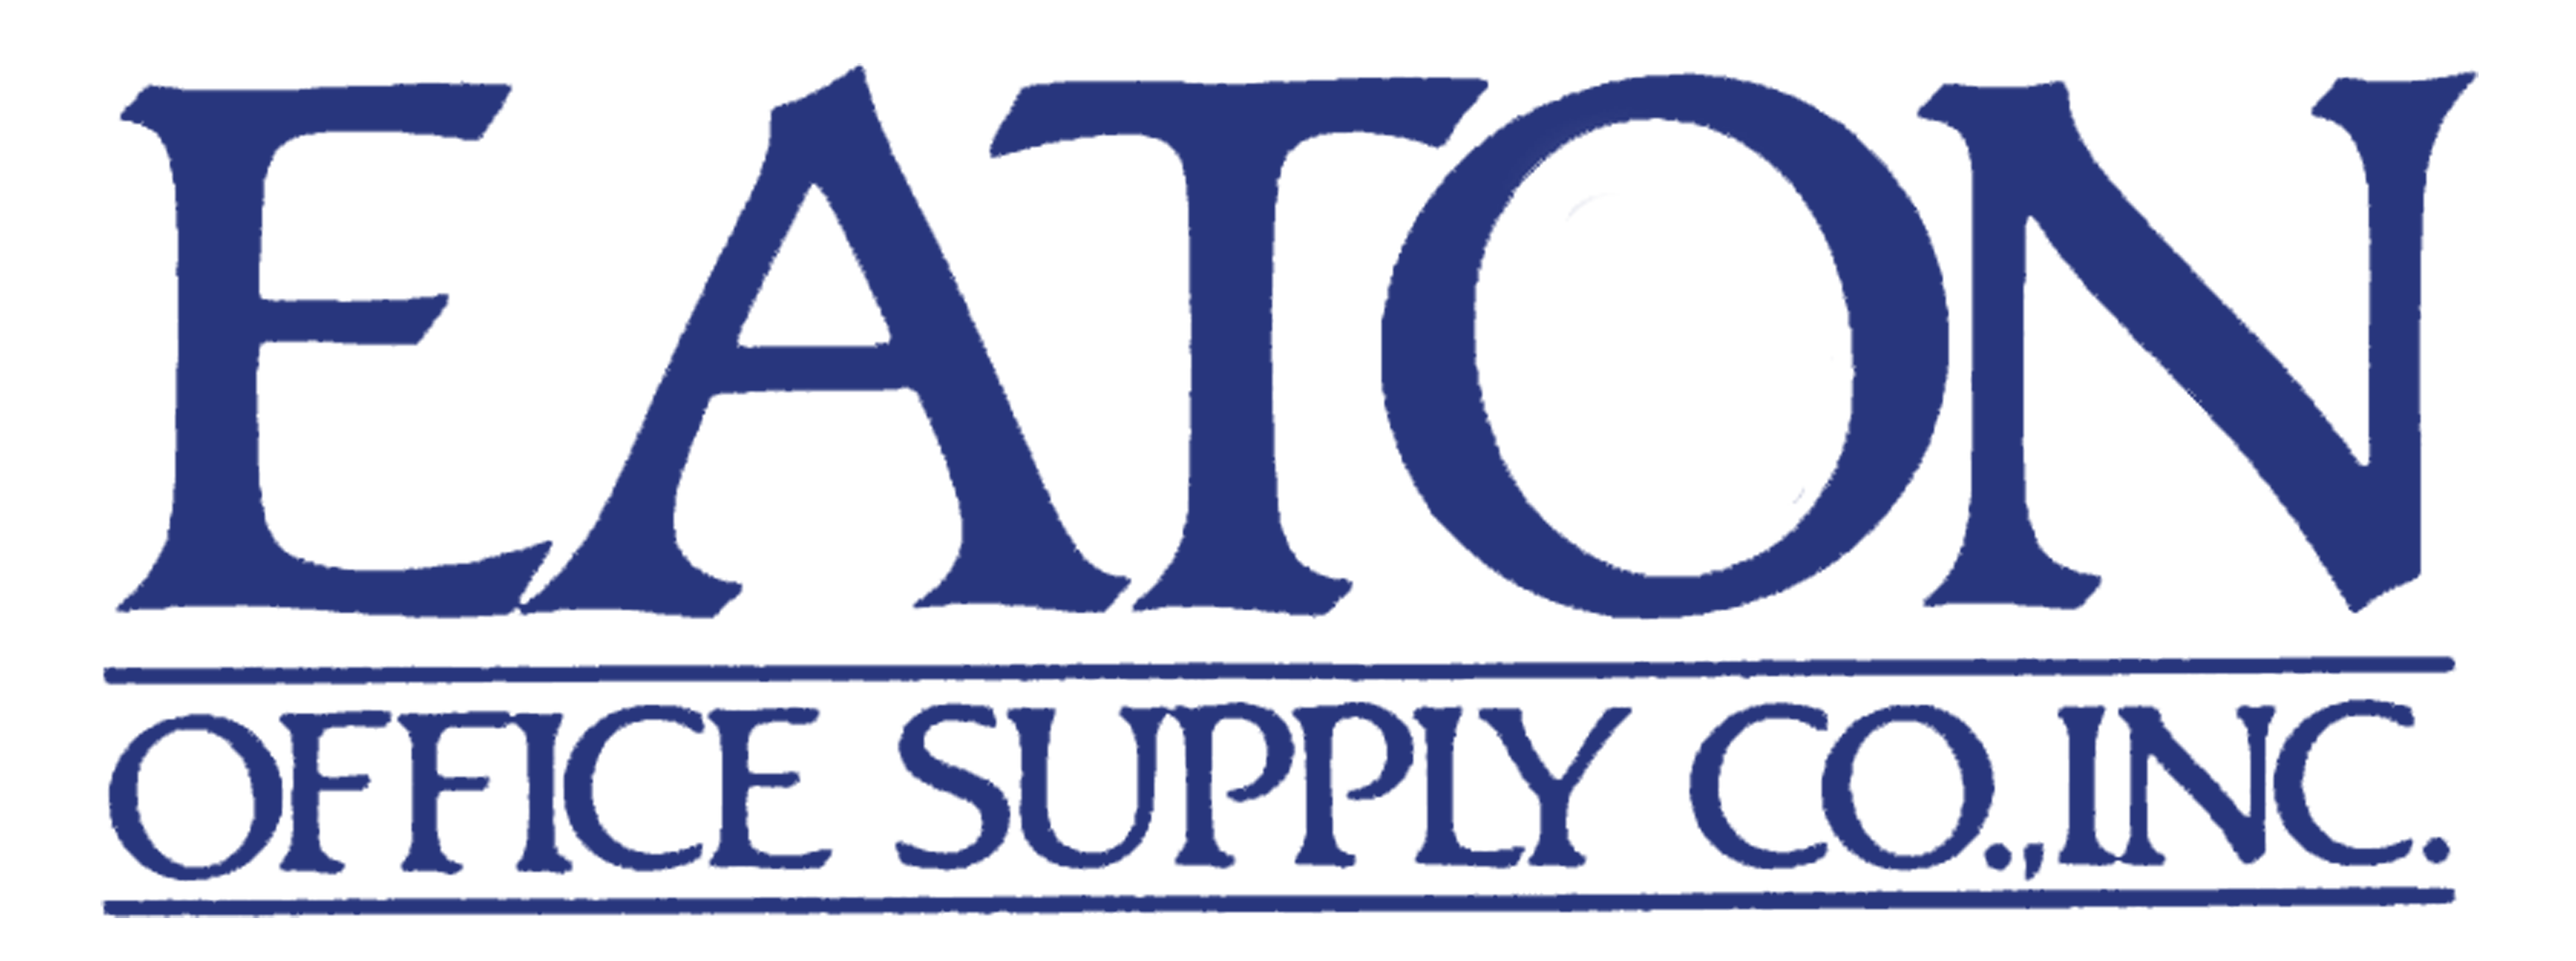 Eaton Logo - Eaton logo » Community Services for Every1